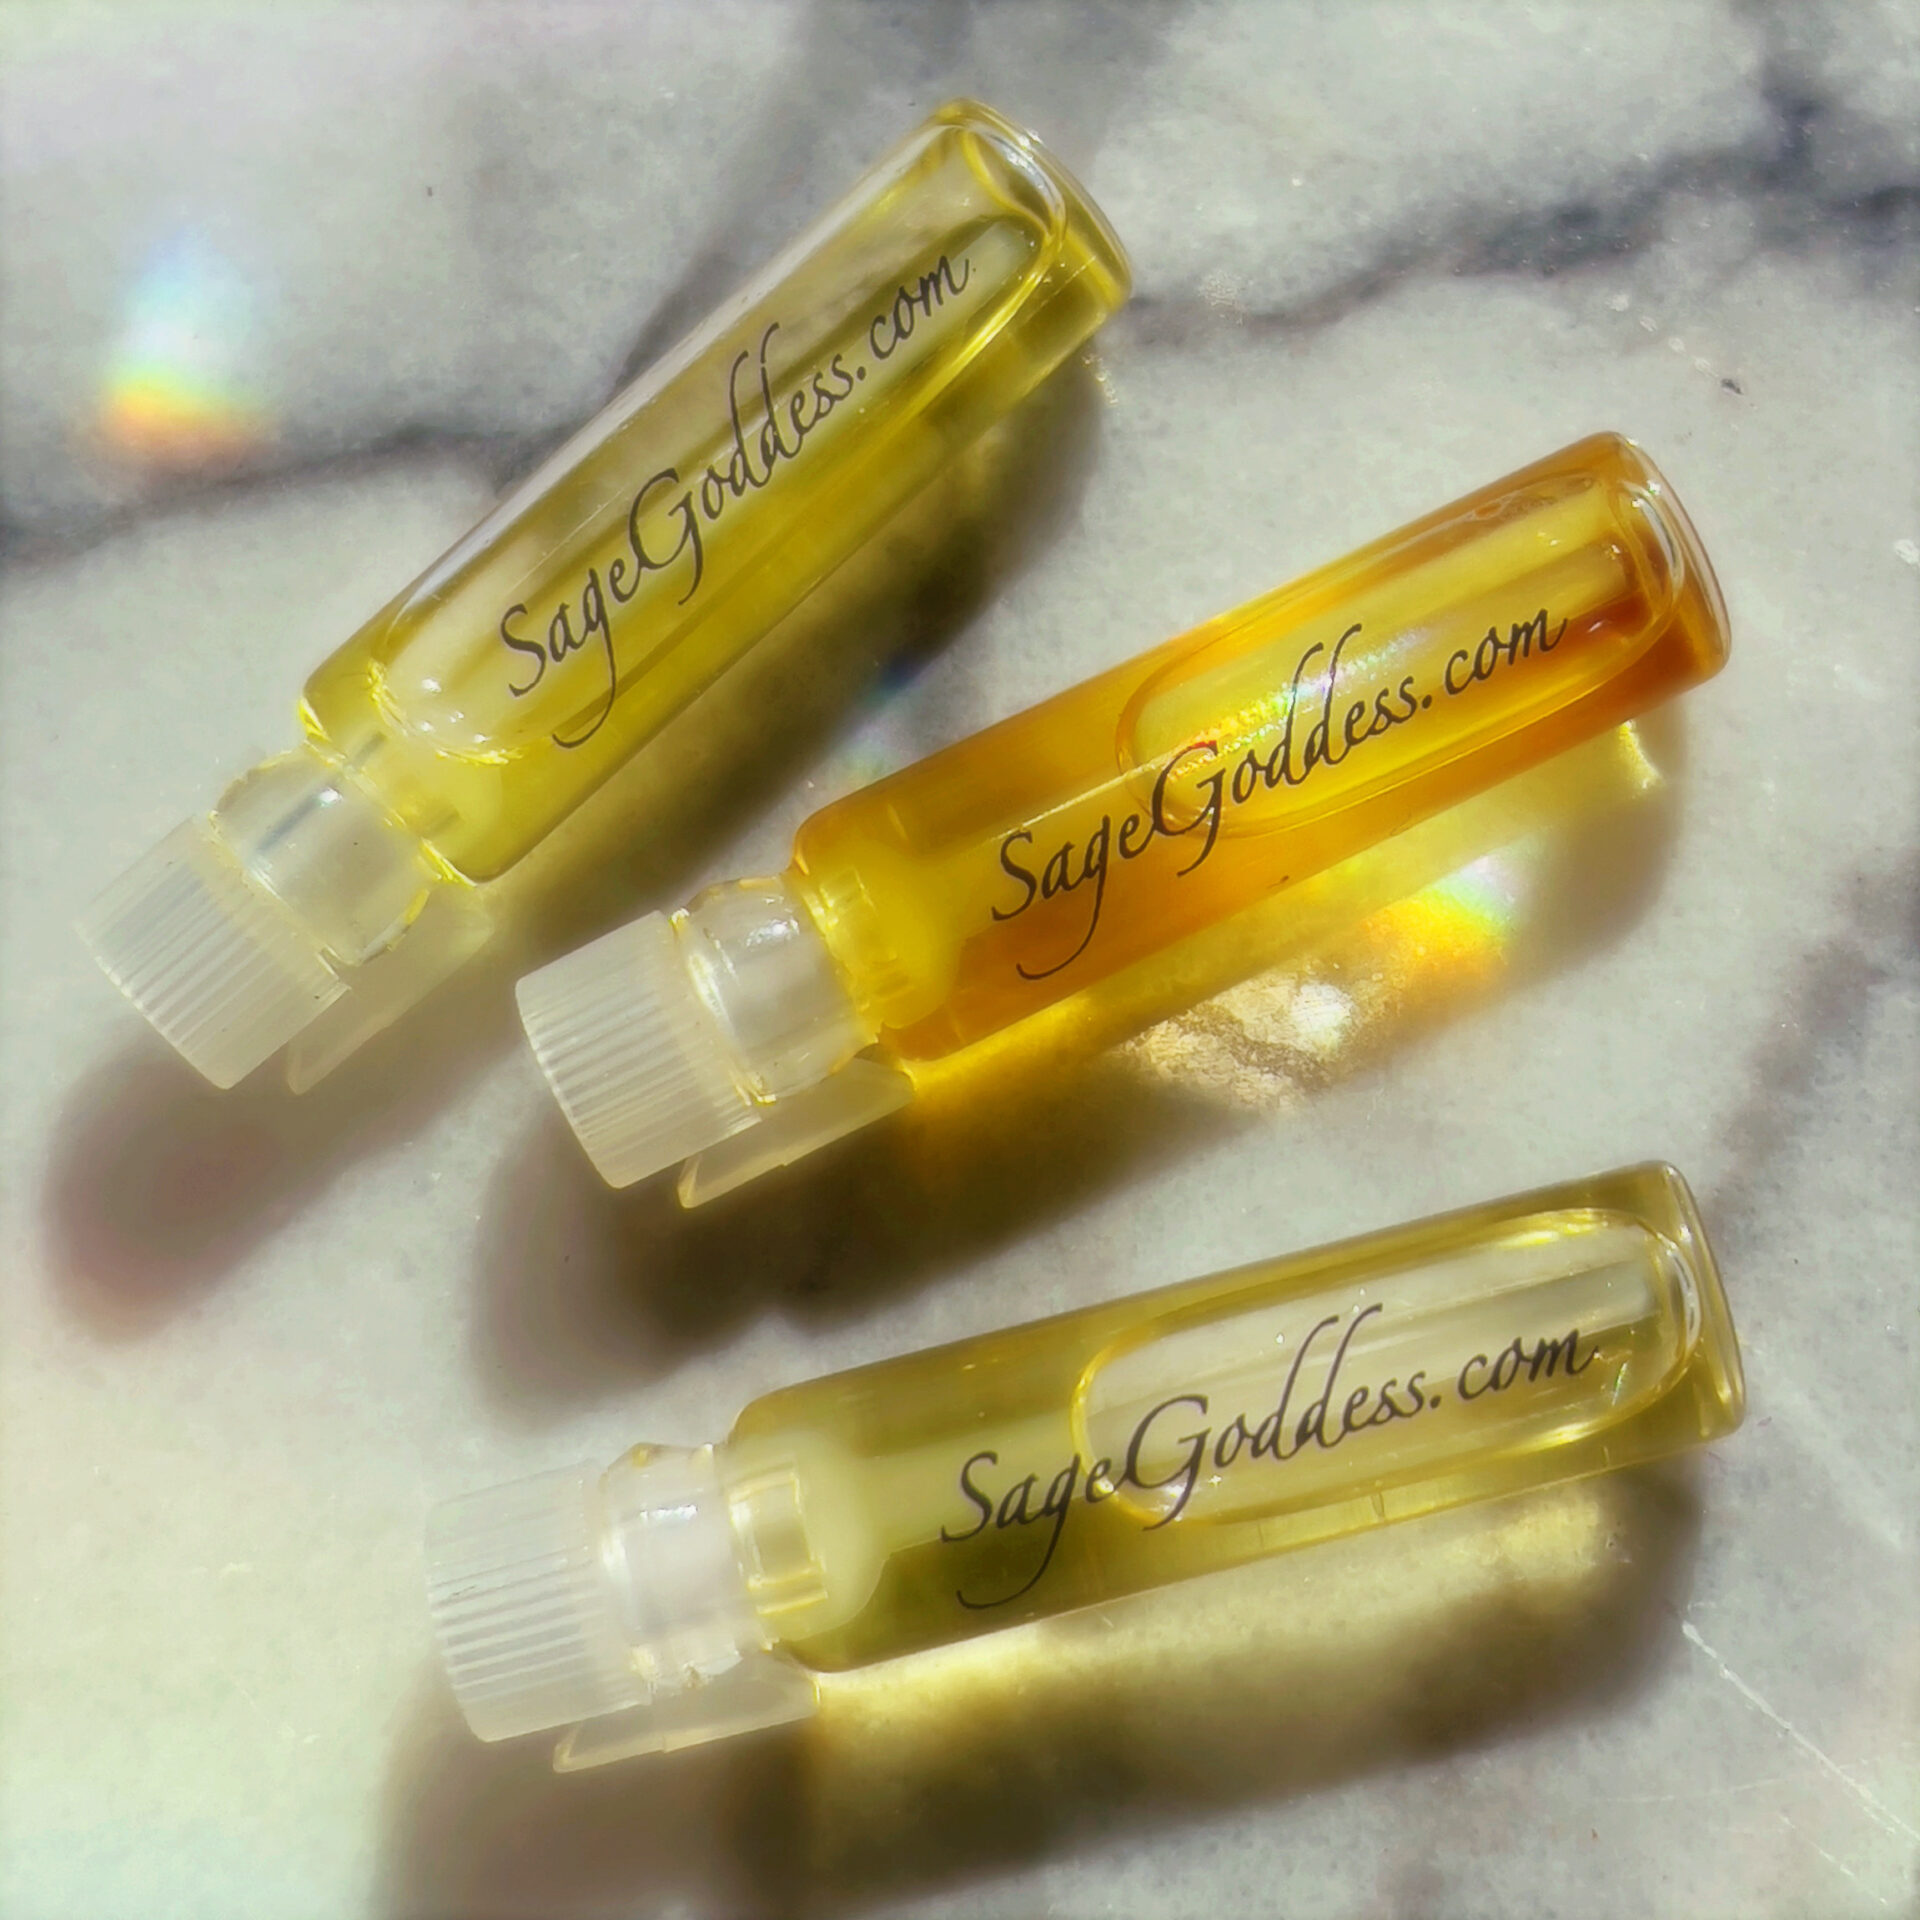 Sage Goddess Gaudium Perfume for illumination and happiness